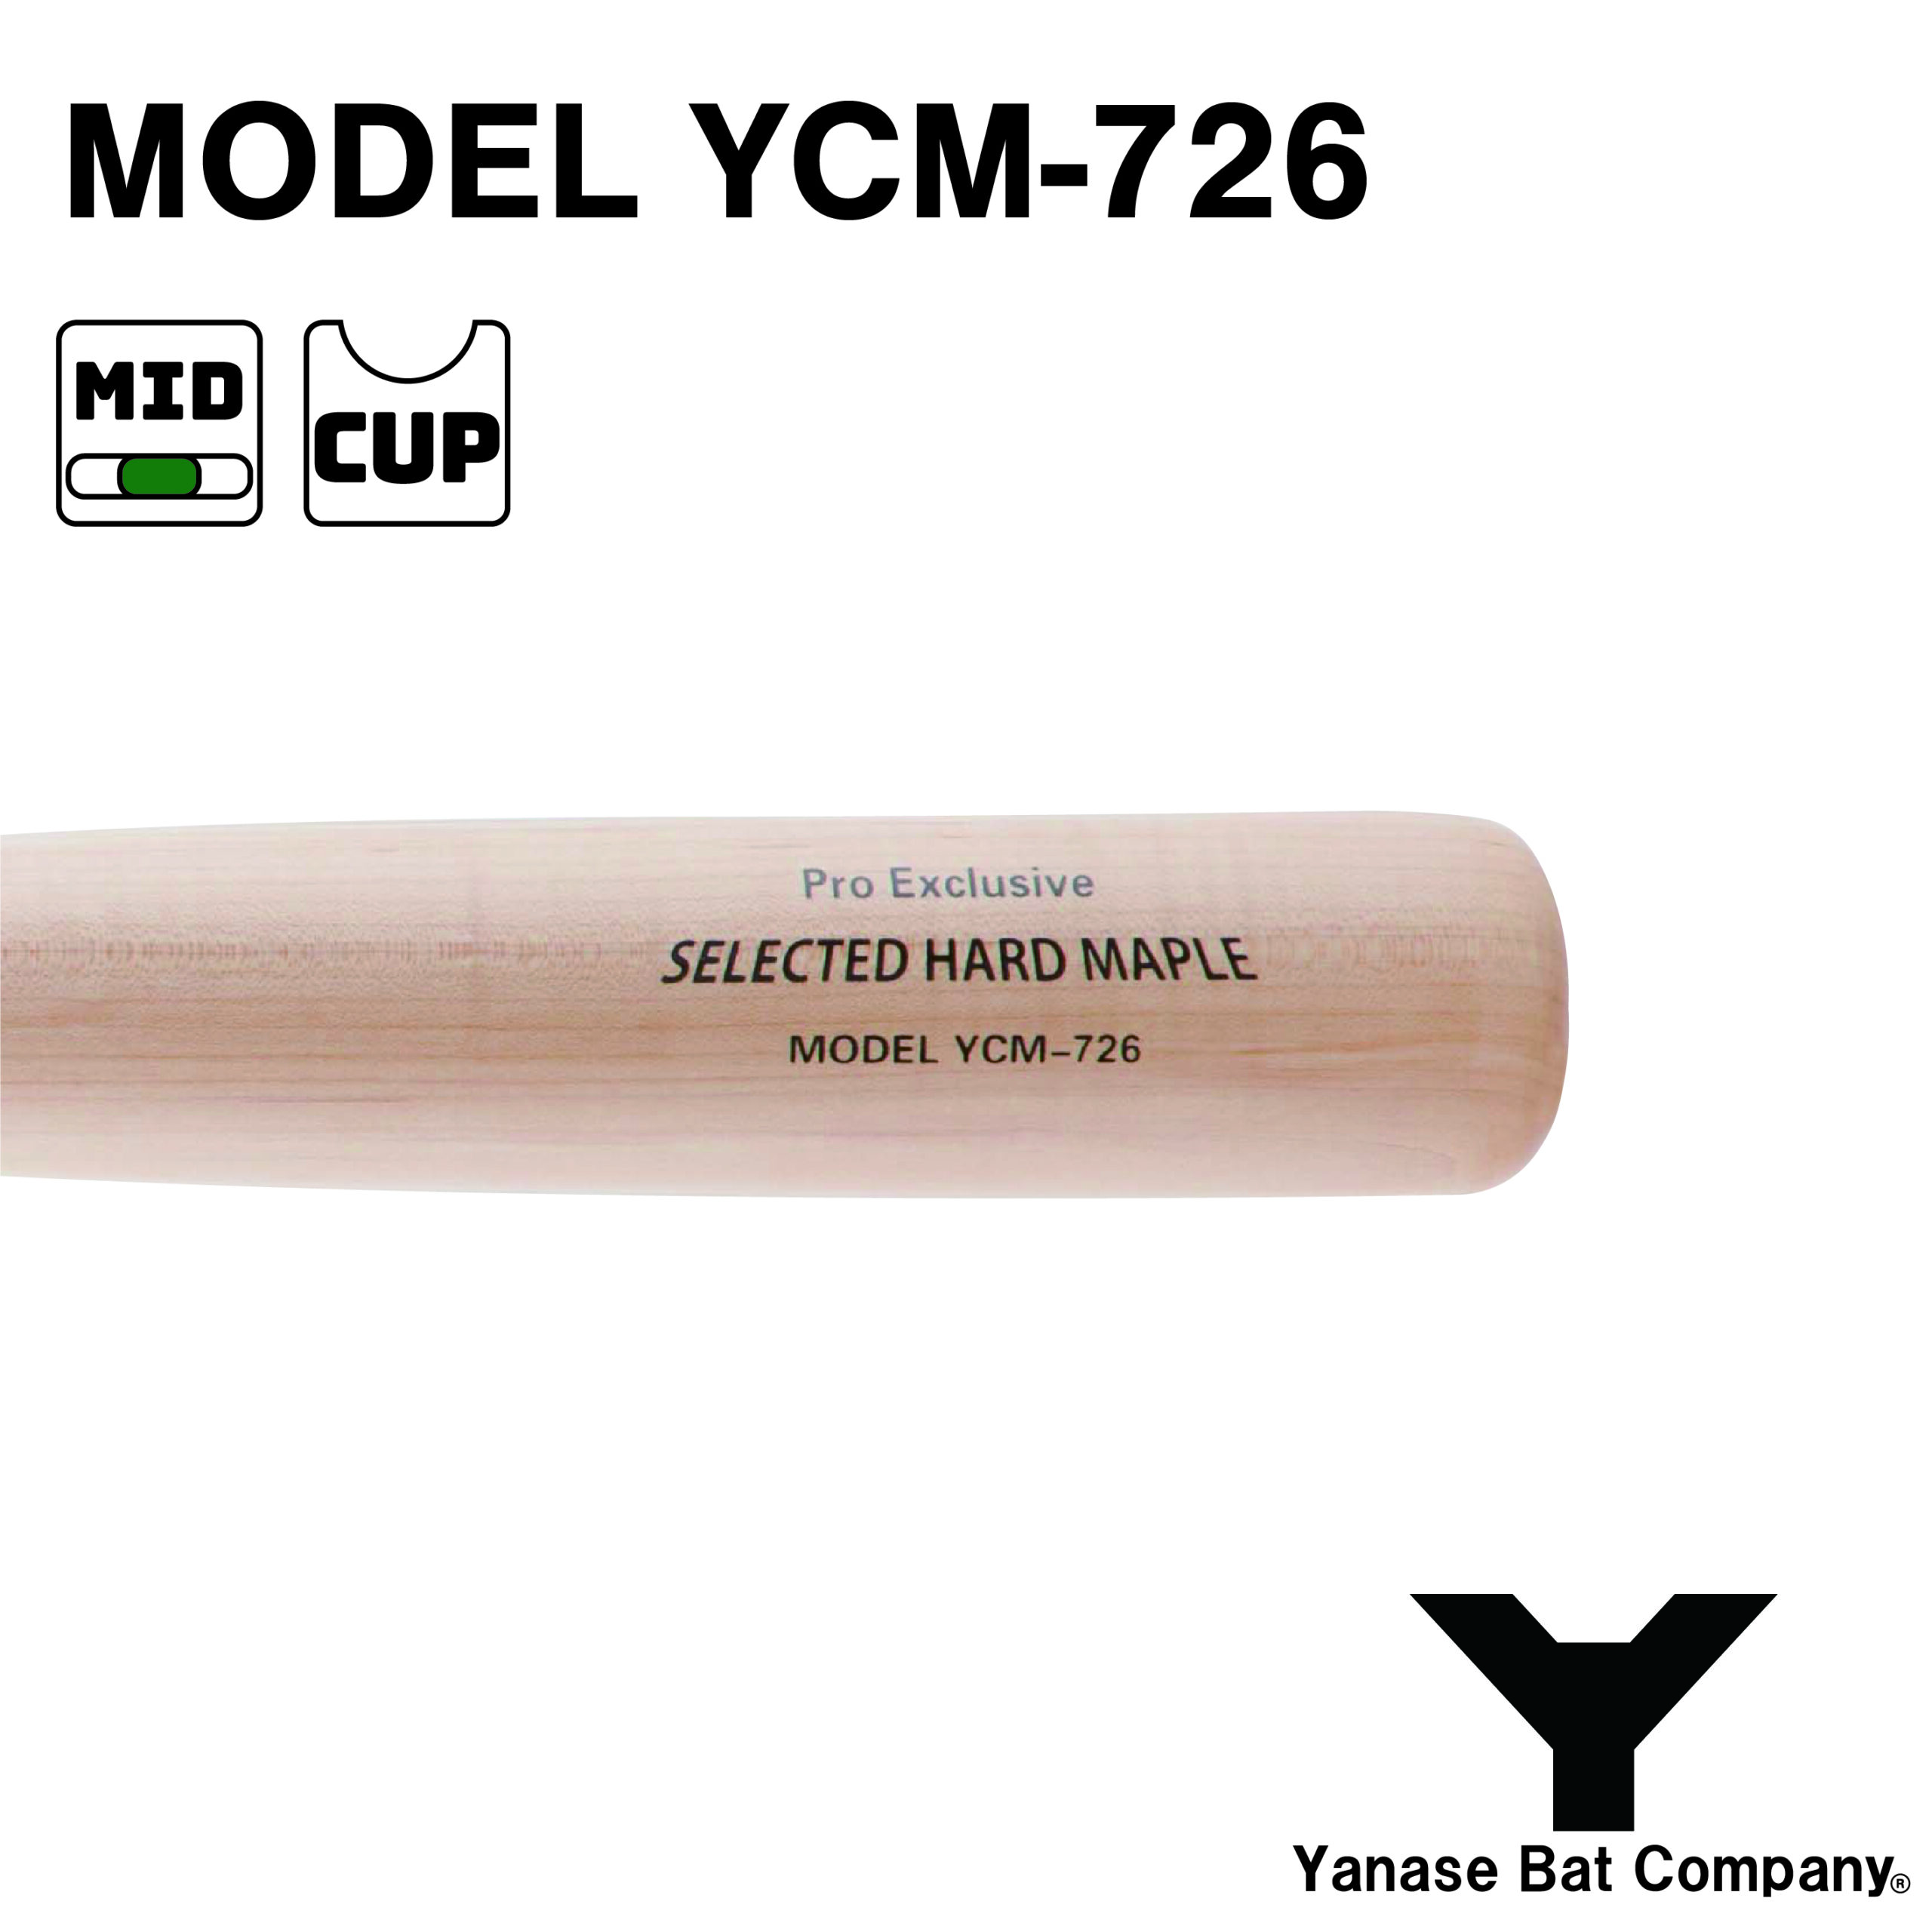 YCM-726 - YANASE BAT COMPANY